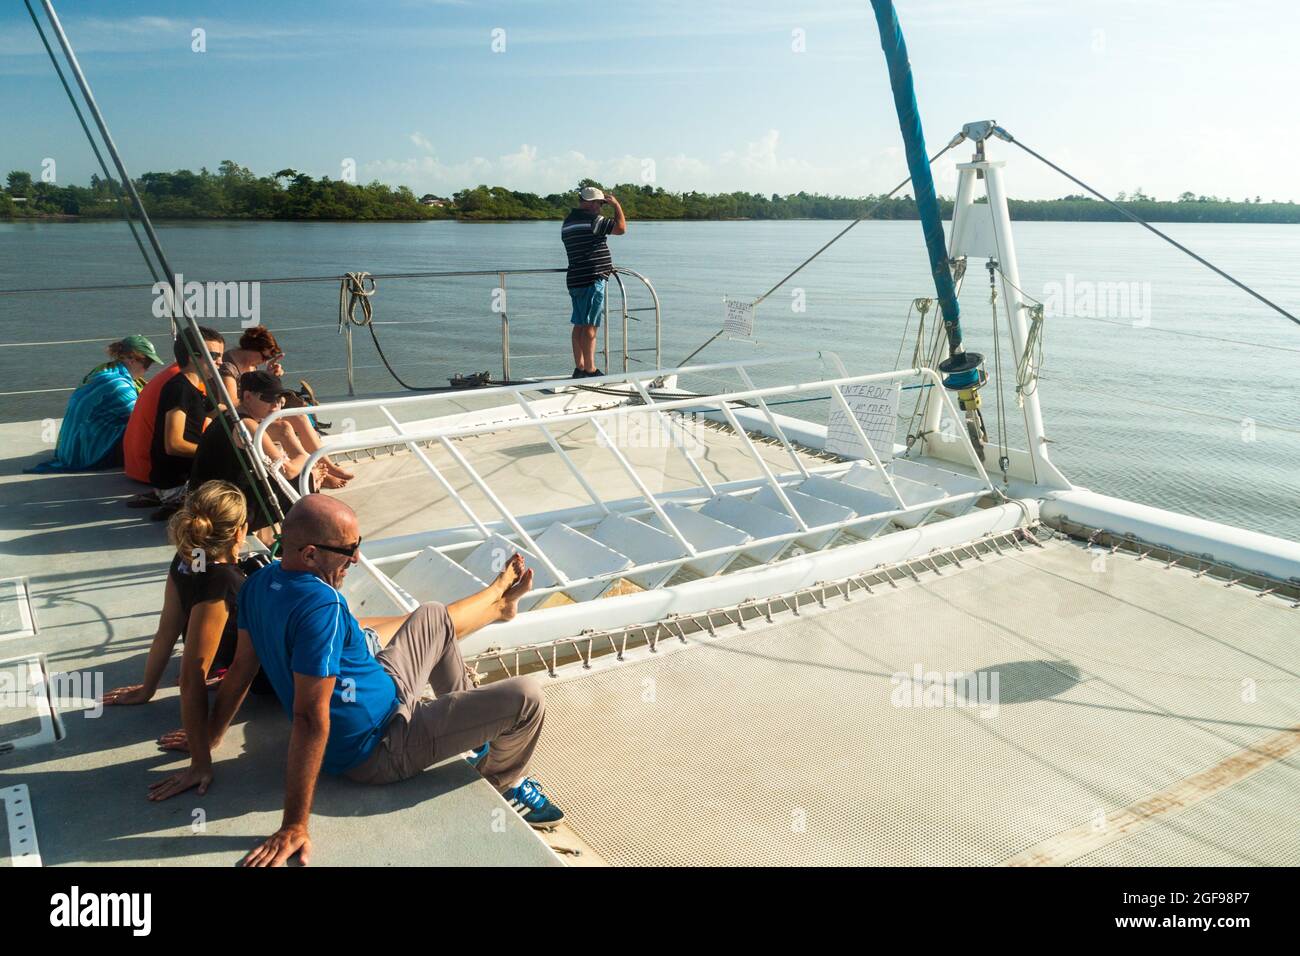 KOUROU, FRENCH GUIANA - AUGUST 2, 2015: Tourists aboard modern catamaran on their way to Iles du Salut (Islands of Salvation) in French Guiana. Stock Photo